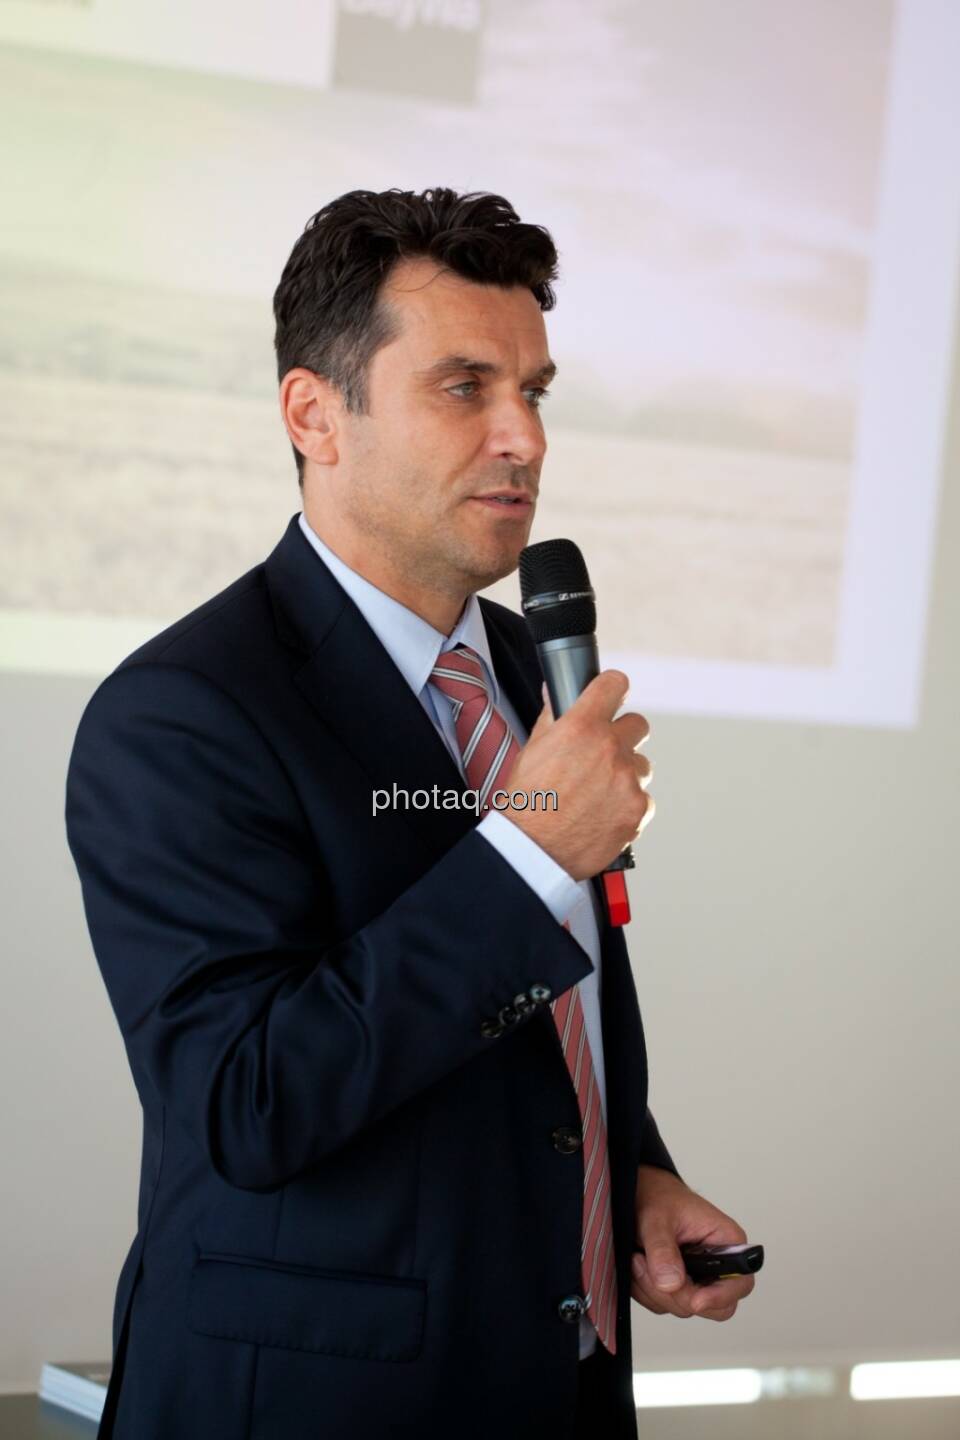 Josko Radeljic, Leiter Investor Relations, BayWa AG